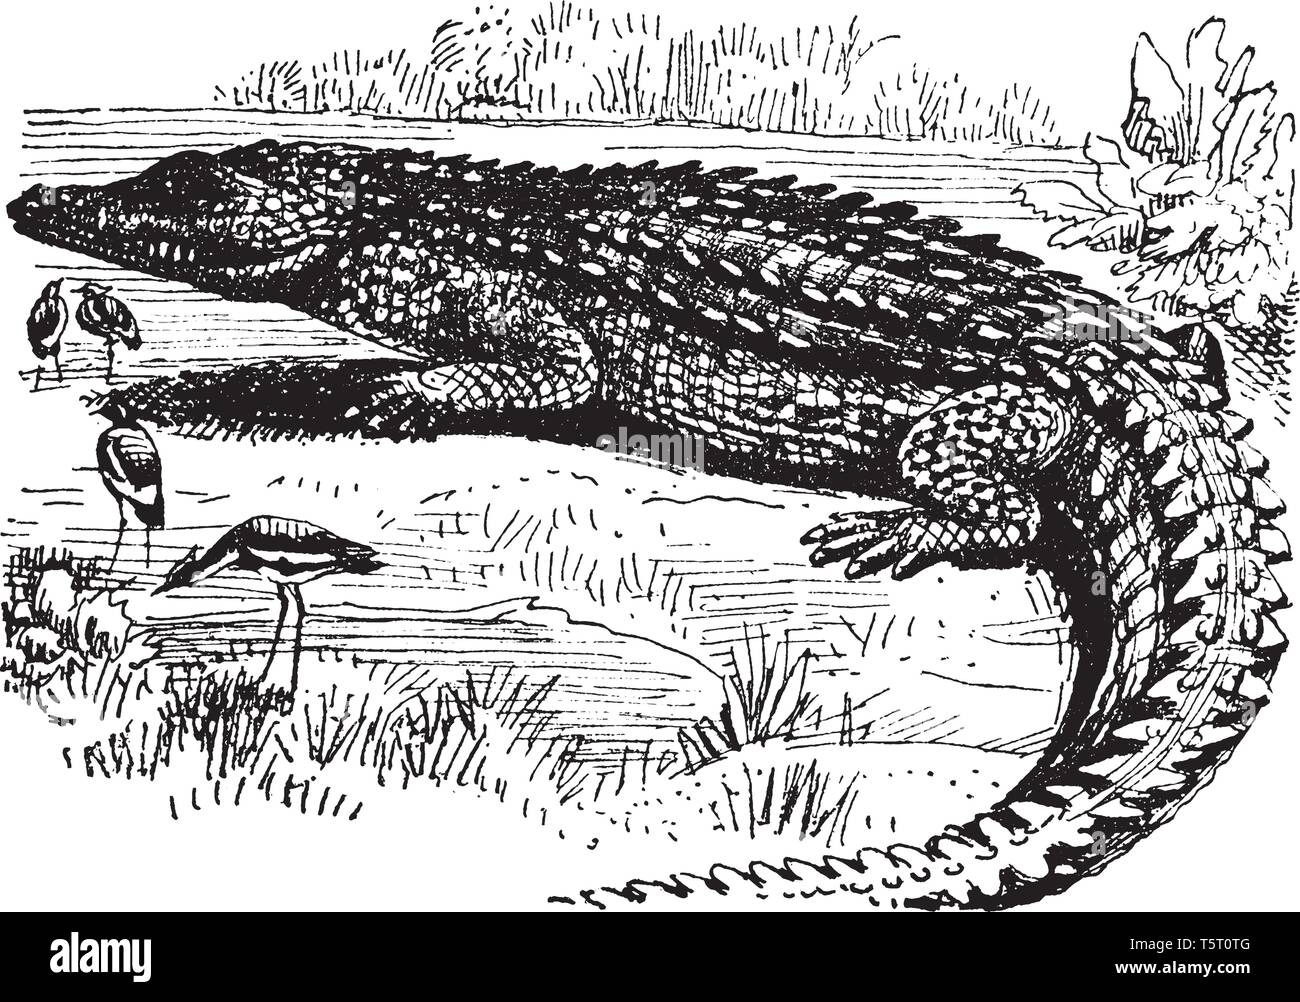 Nile crocodile stock vector images